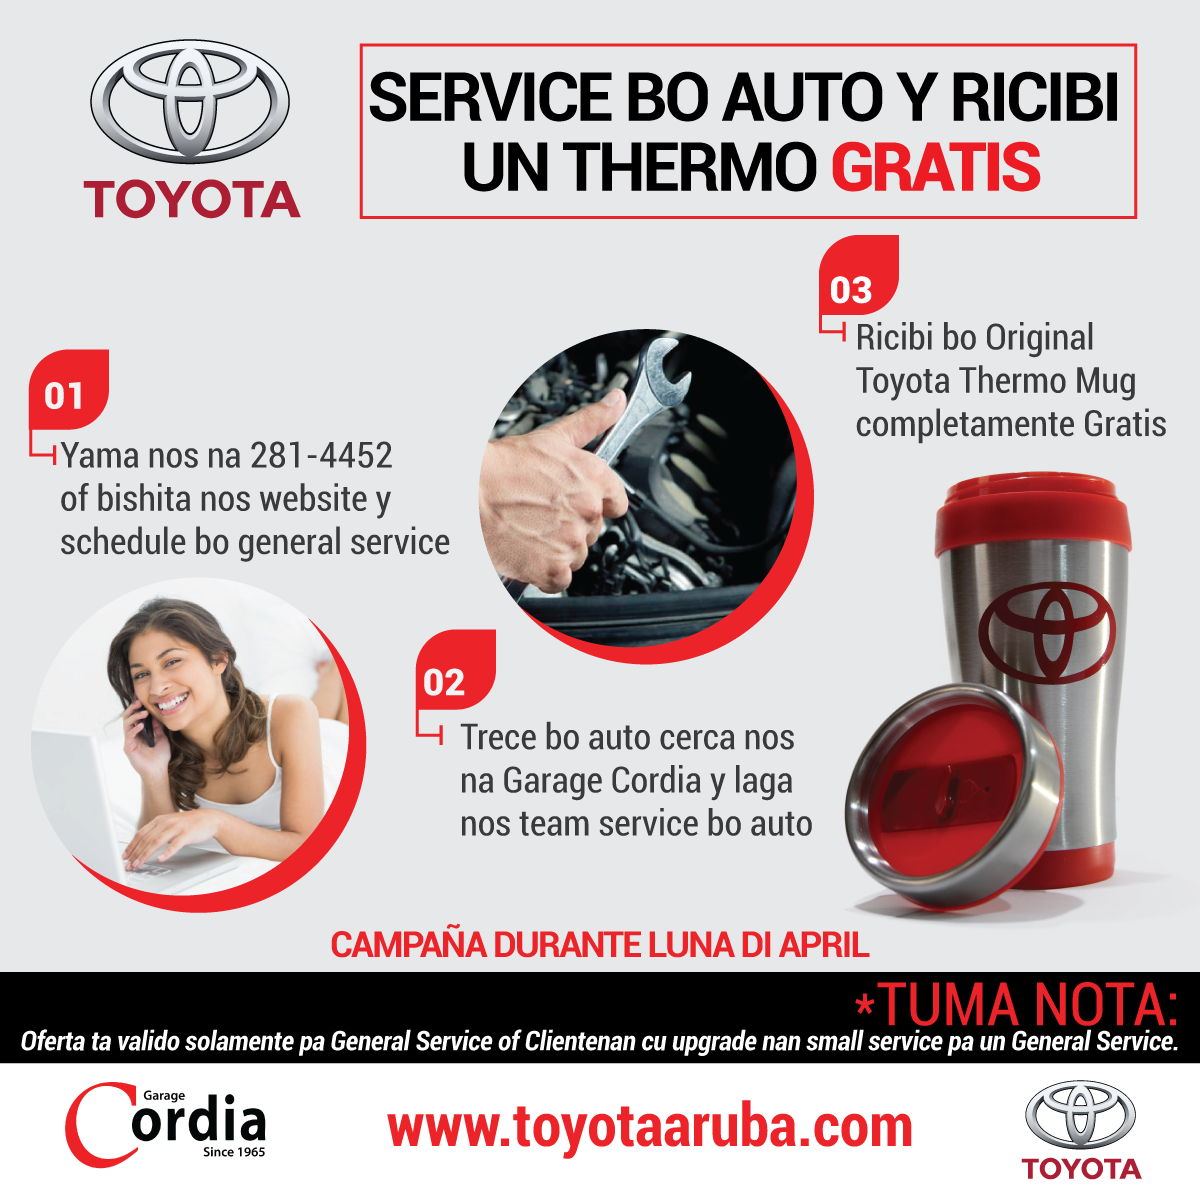 Toyota-Garage-Cordia_Aruba-free-Tumbler-Thermo-Mug-2.jpg